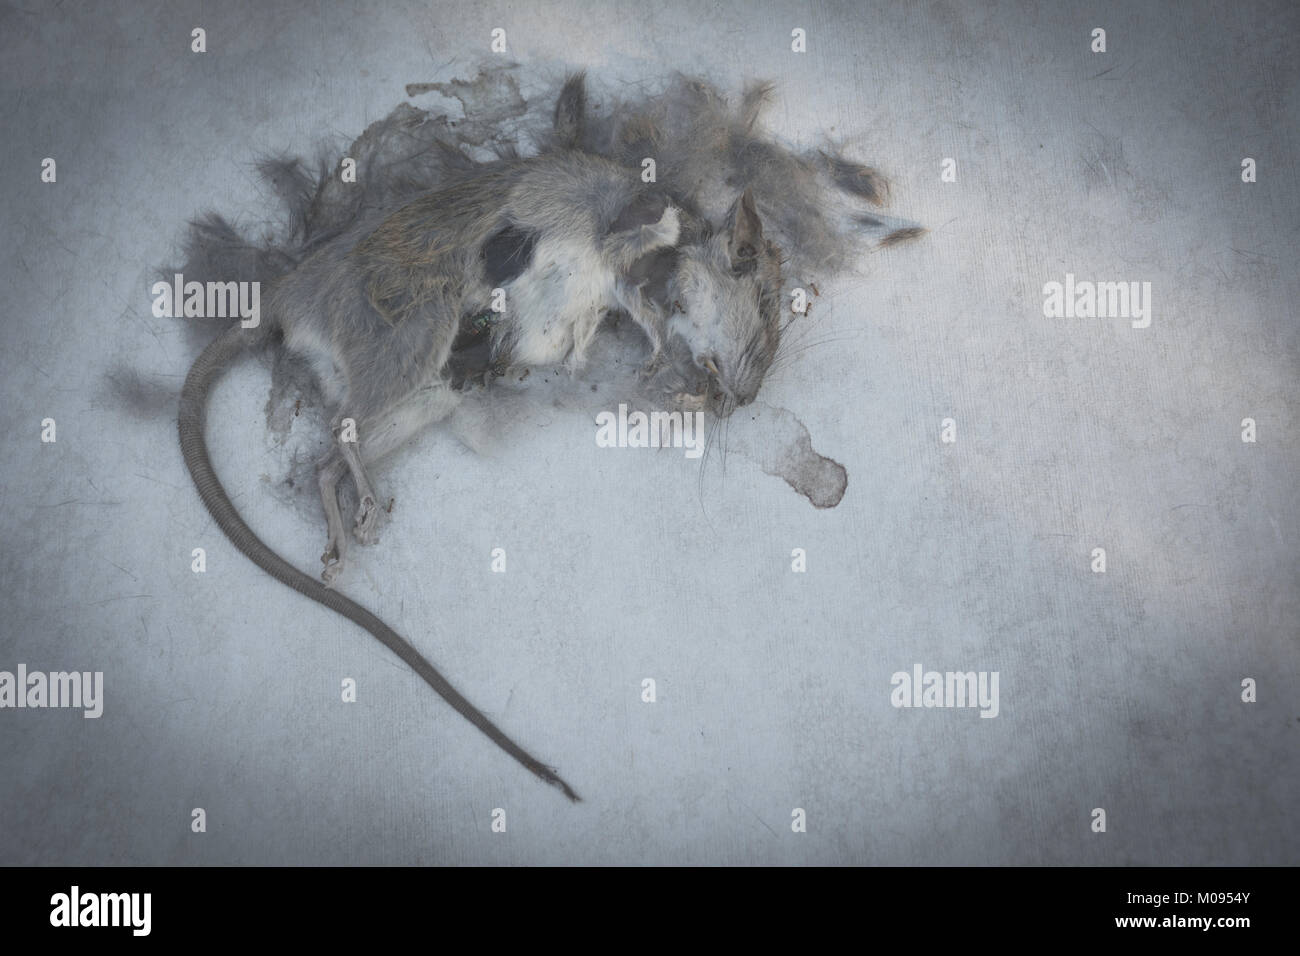 Dead rat, mouse on floor. Dead rat on a ground. Stock Photo